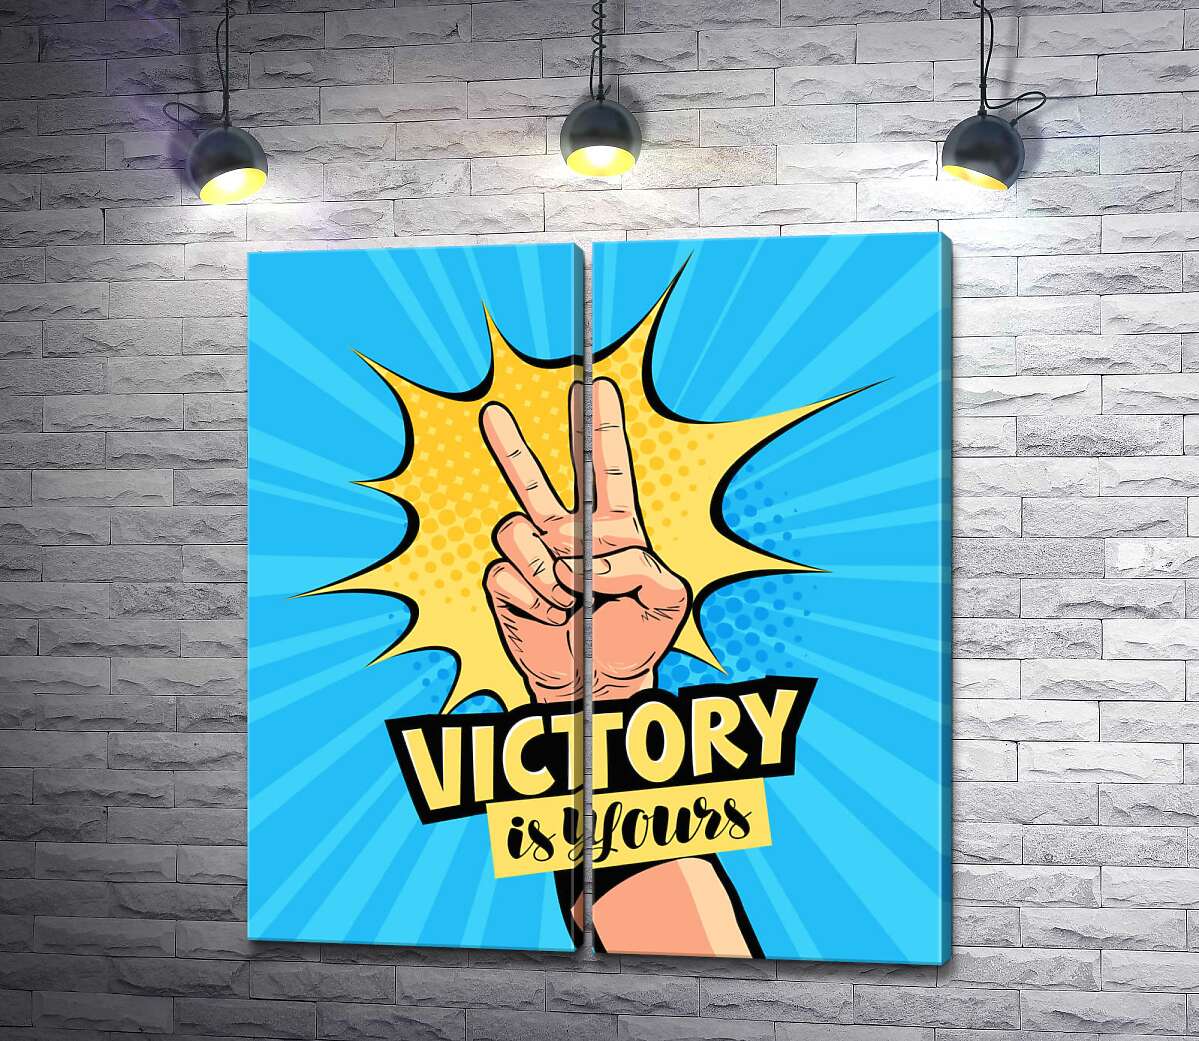 модульная картина Символ победы дополняет фразу "victory is yours"